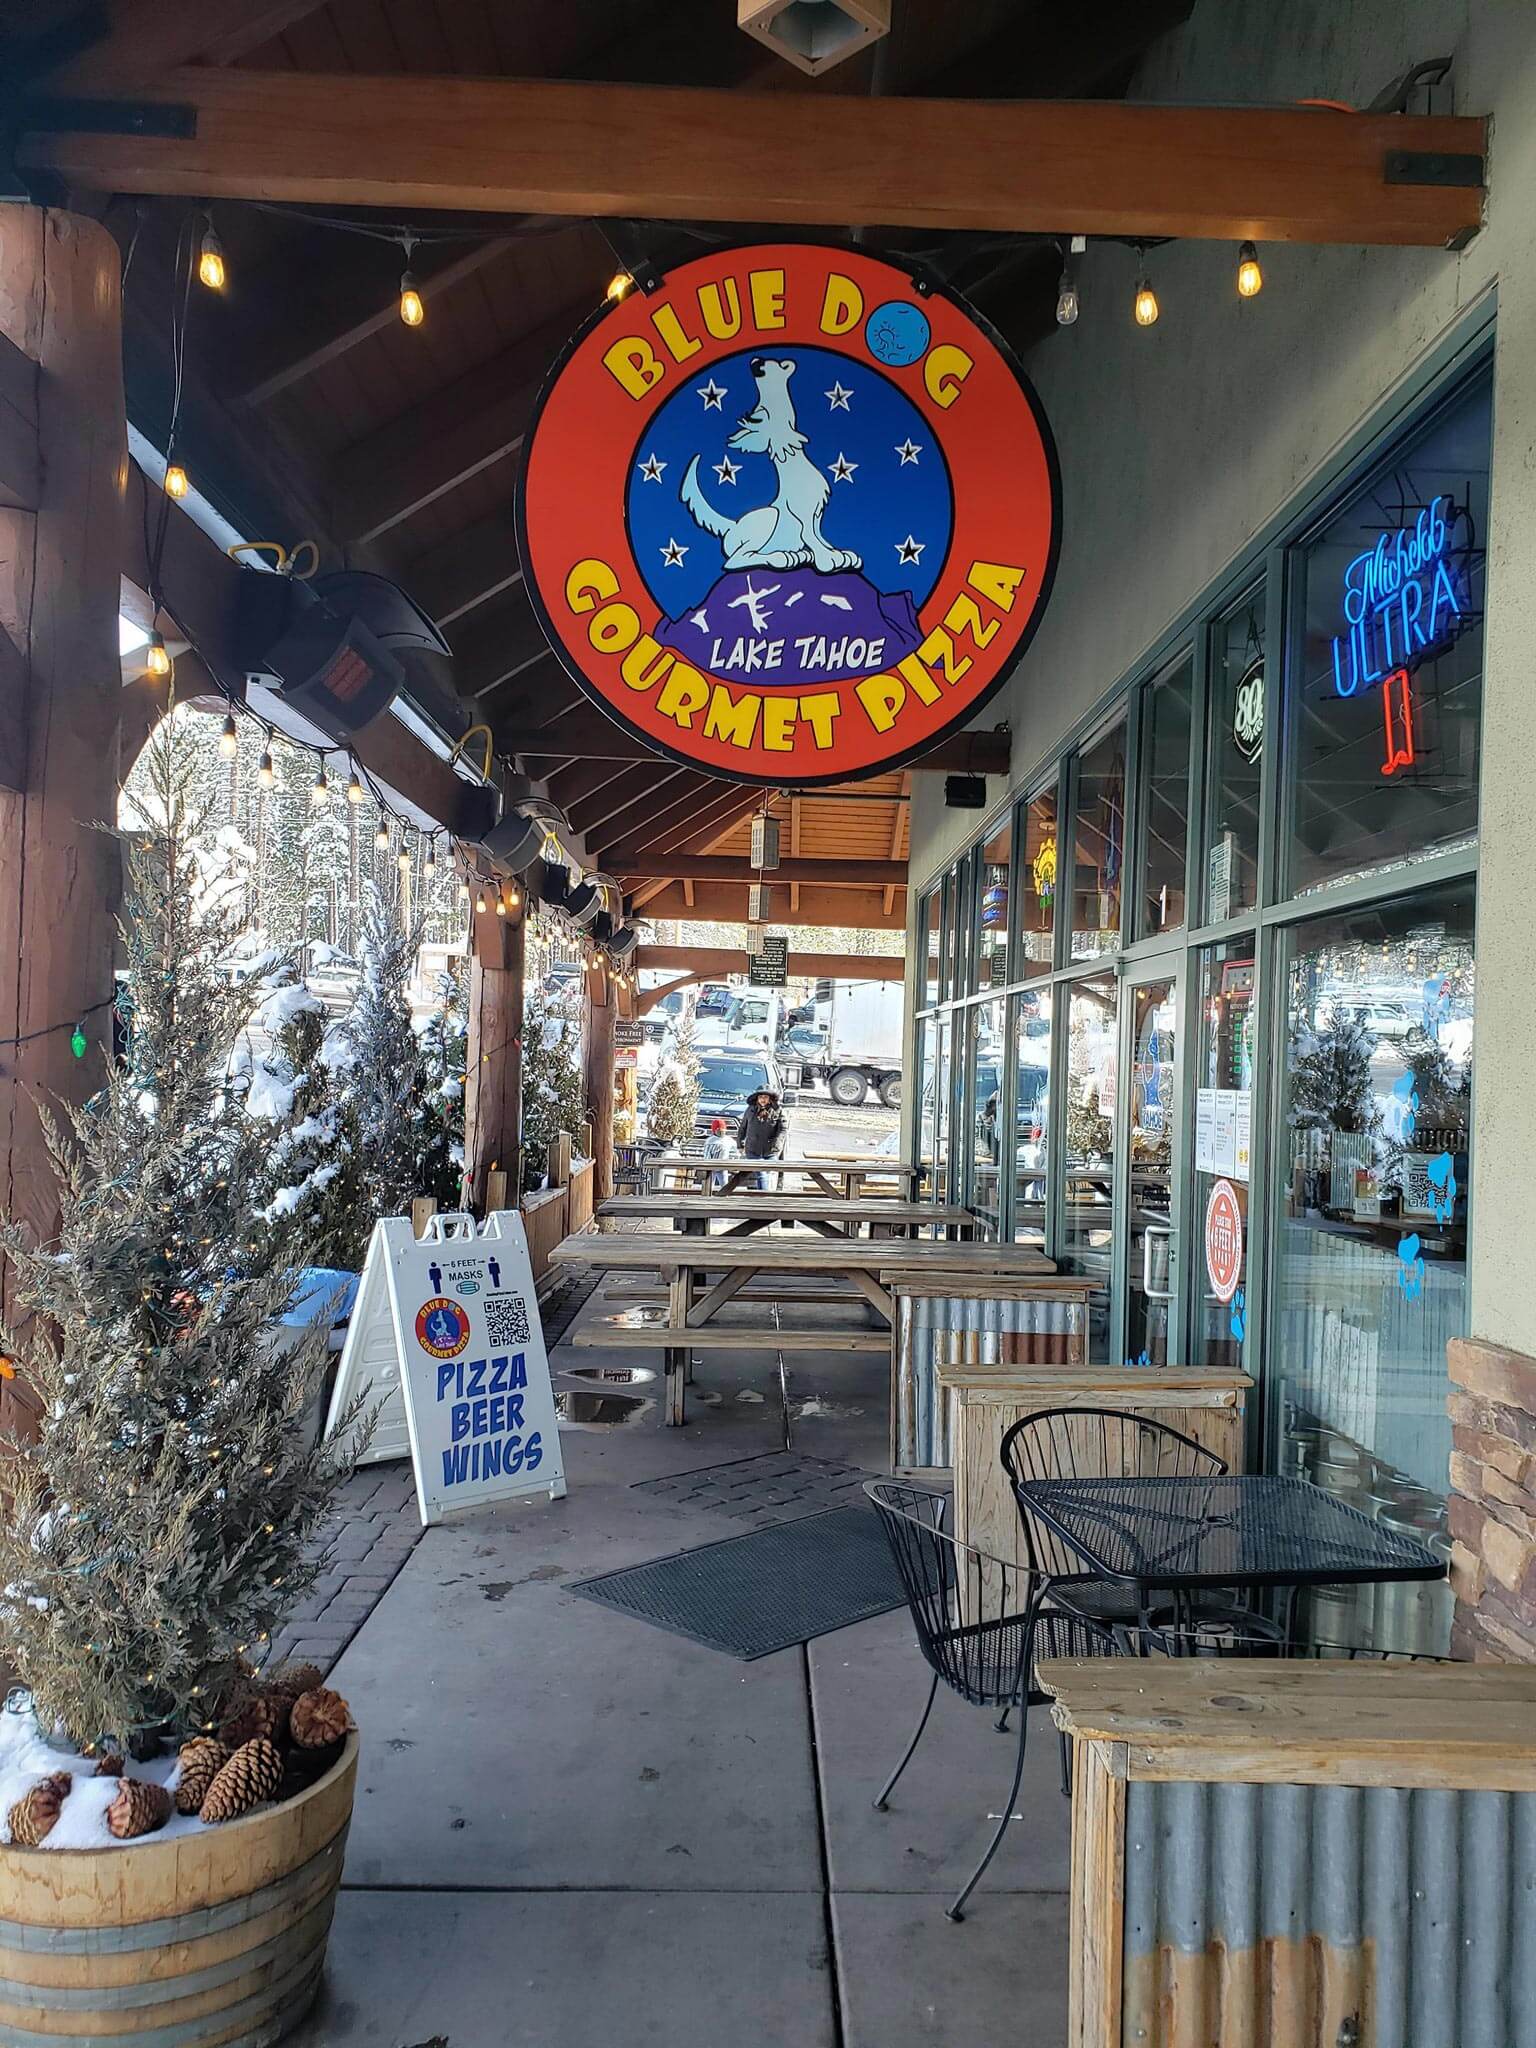 Blue Dog Pizza Stateline Lake Tahoe Ca 